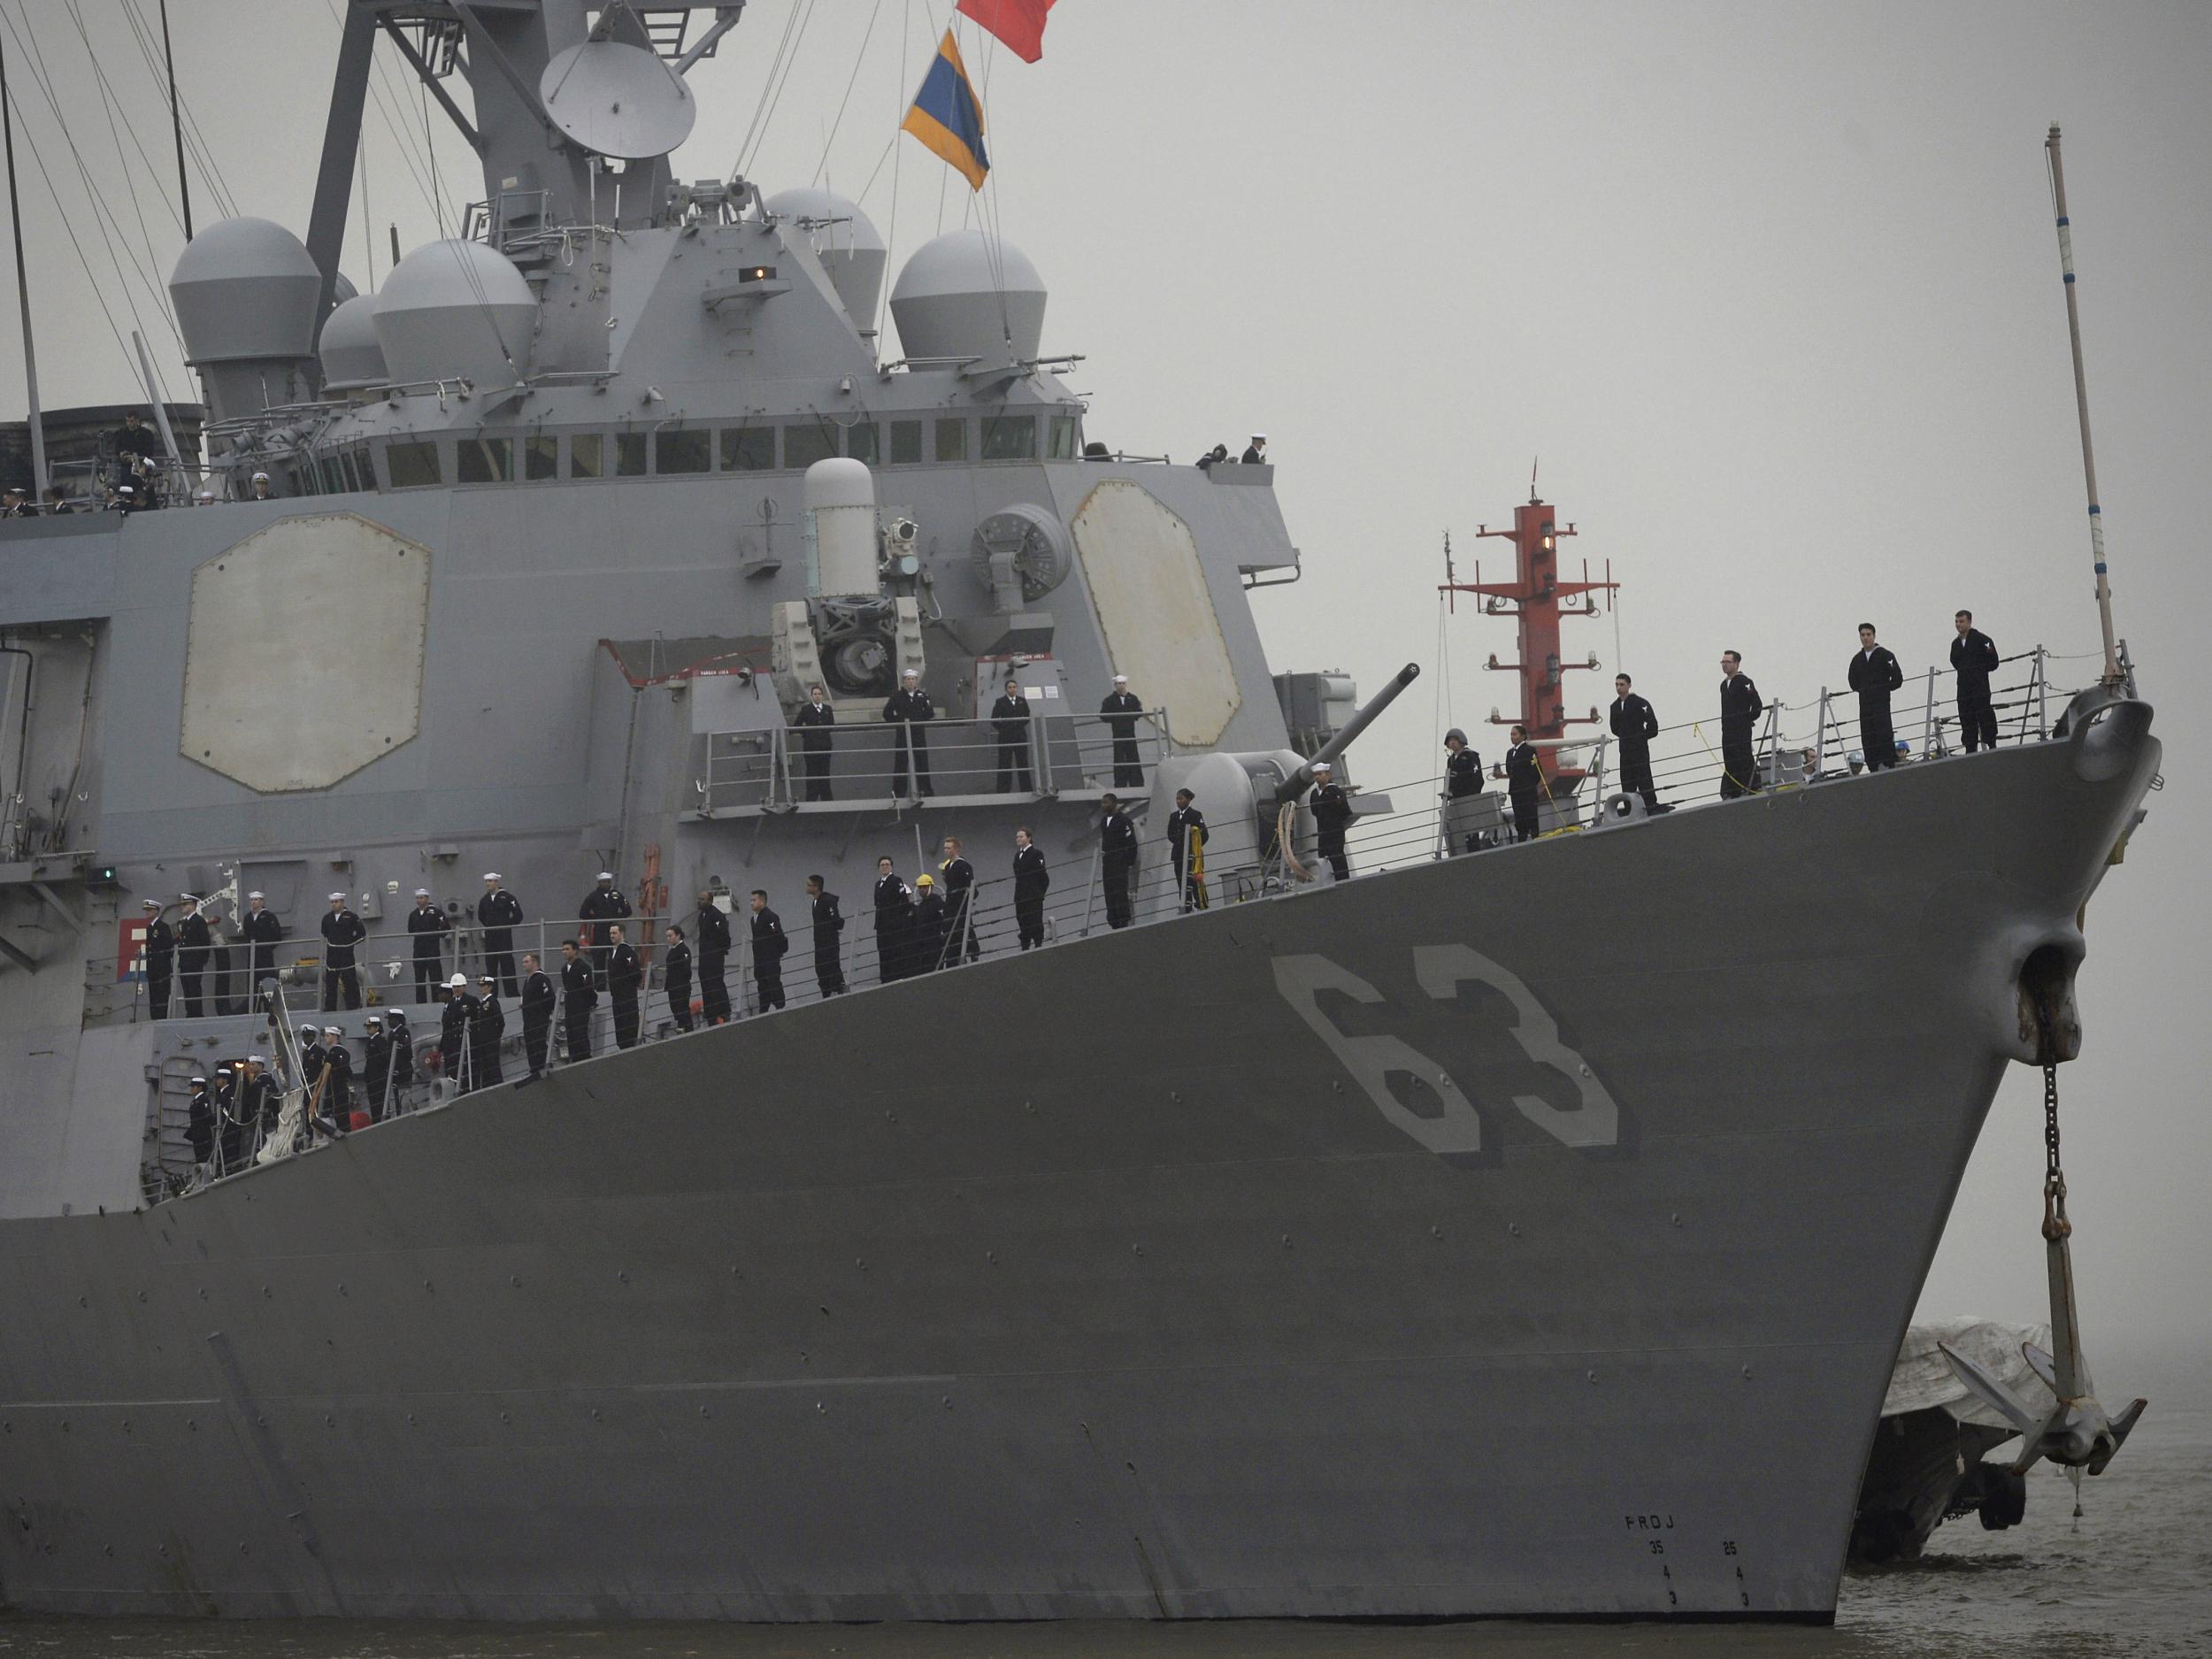 US navy sailors aboard the USS Stethem destroyer vessel